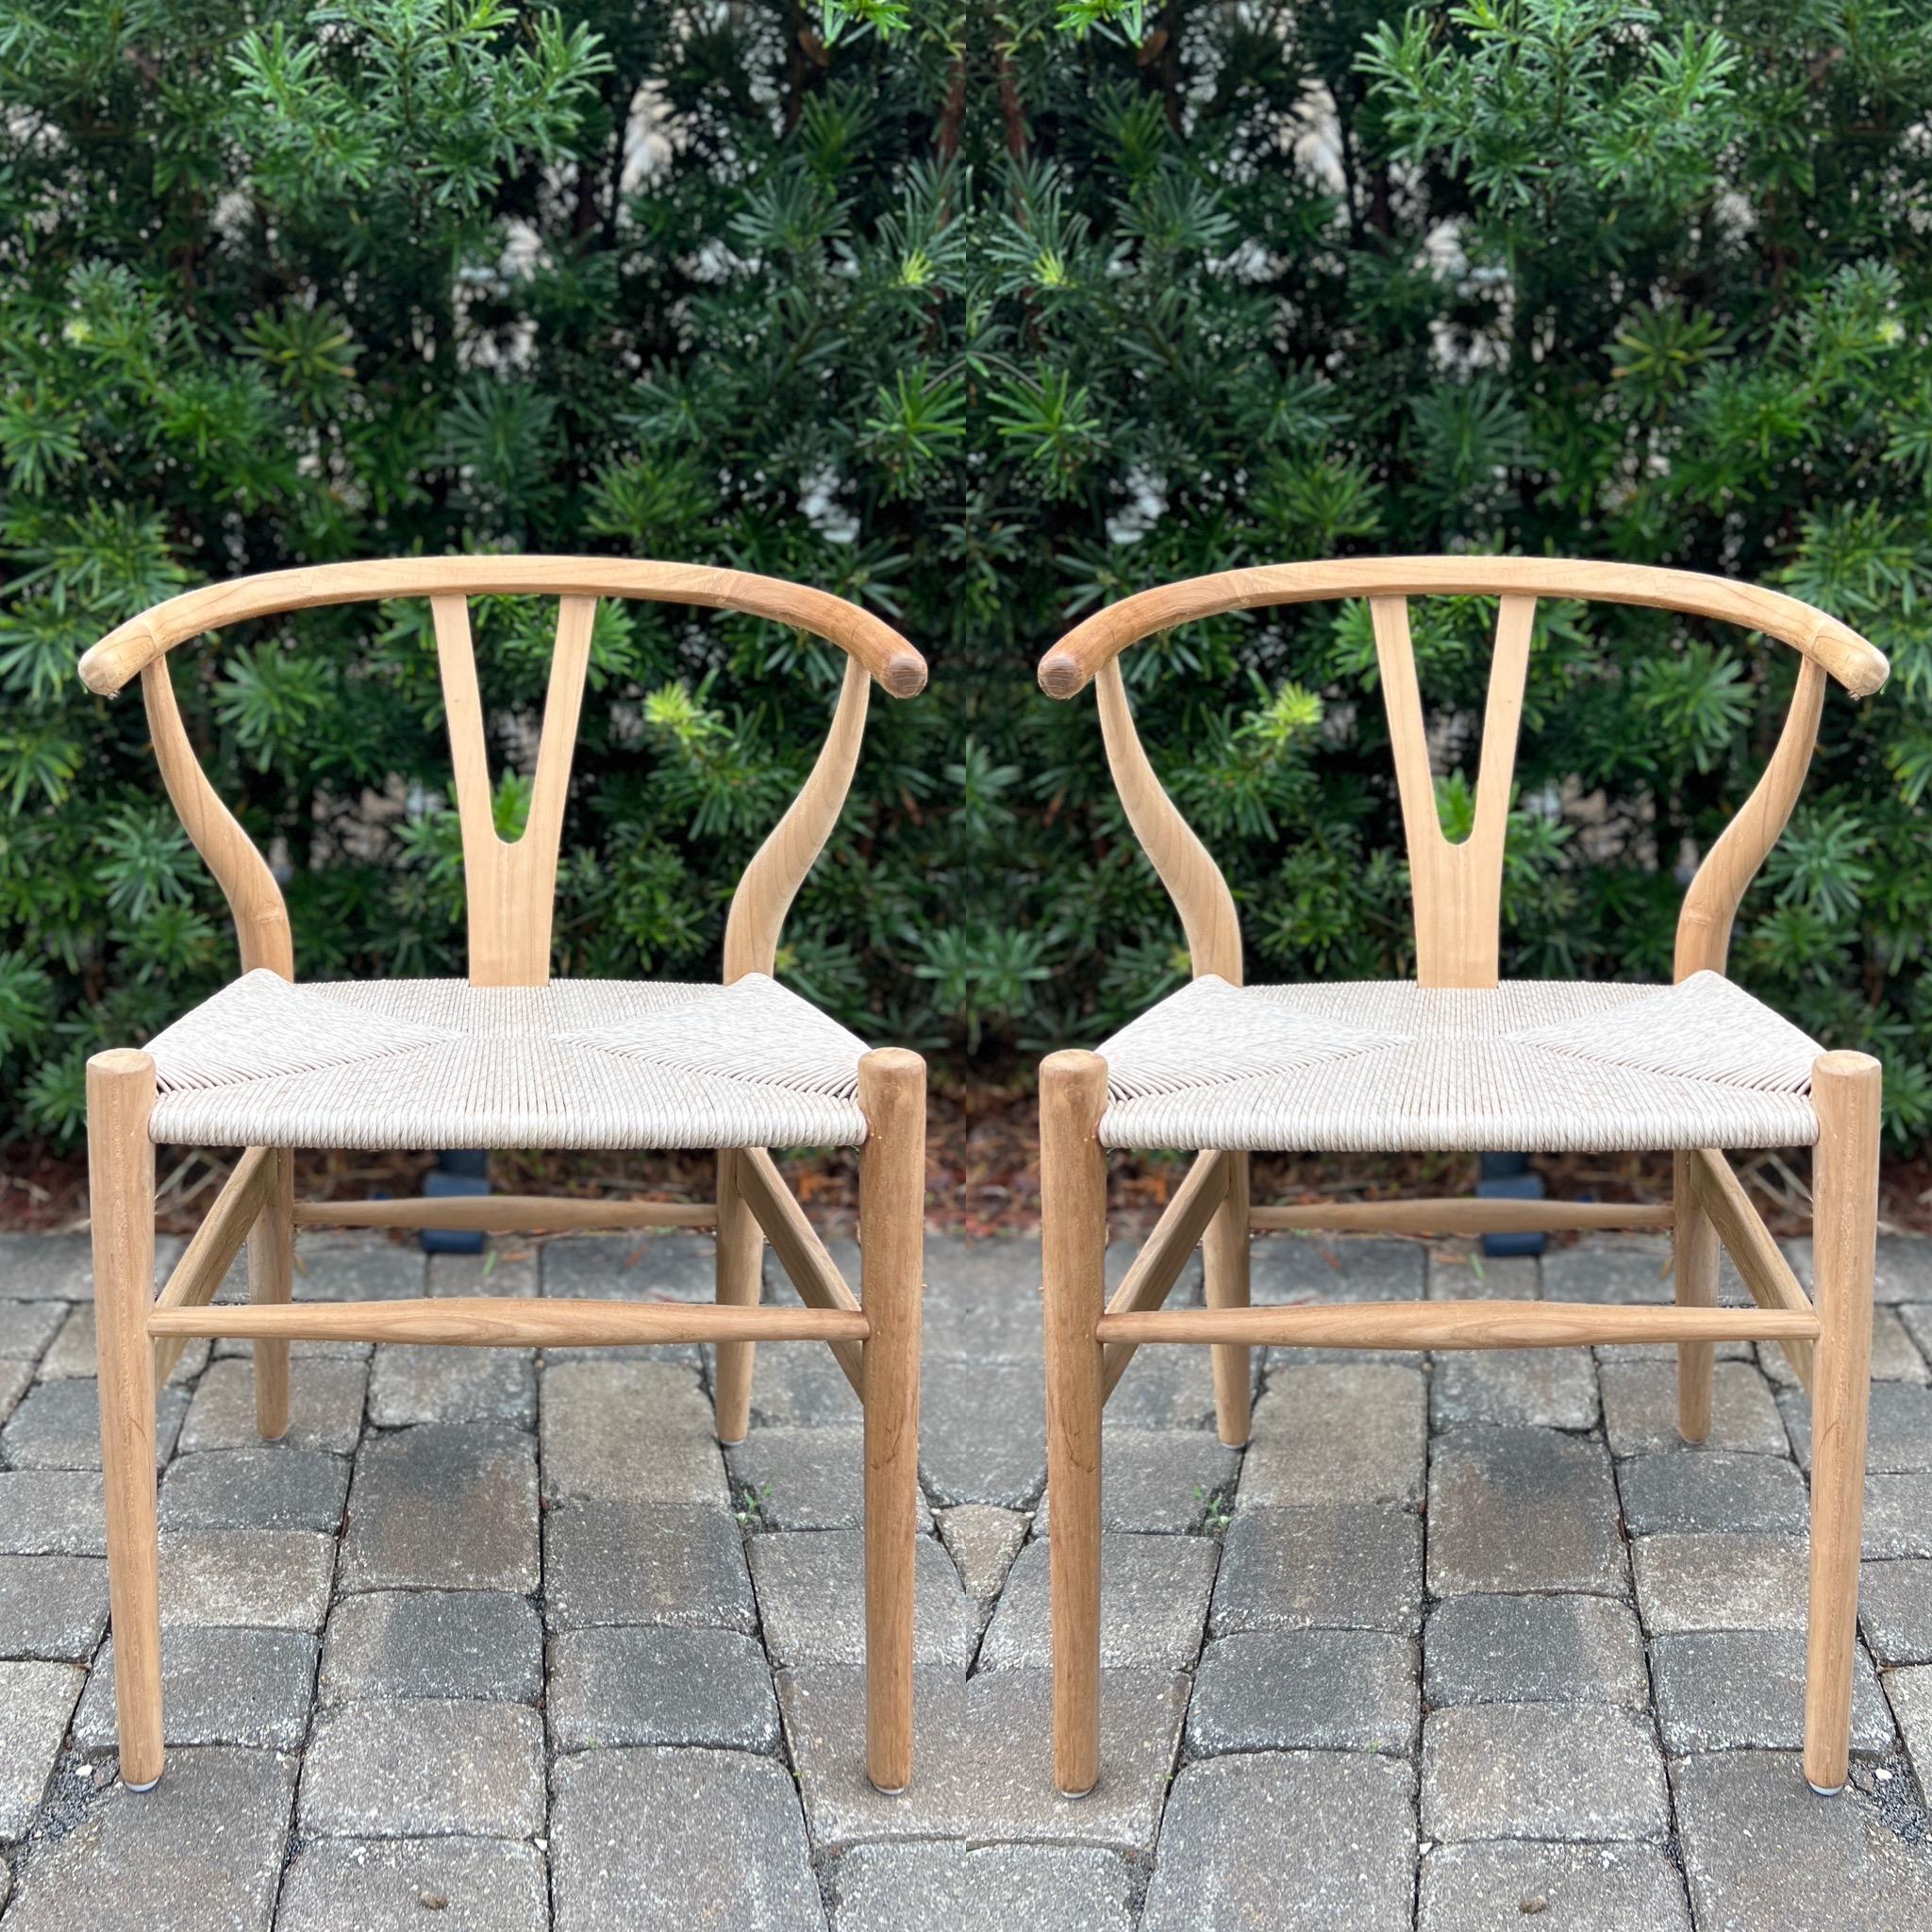 Scandinavian Modern Pair of Mid-Century Modern Chairs in Natural Teak Wood with Woven Seats, Denmark